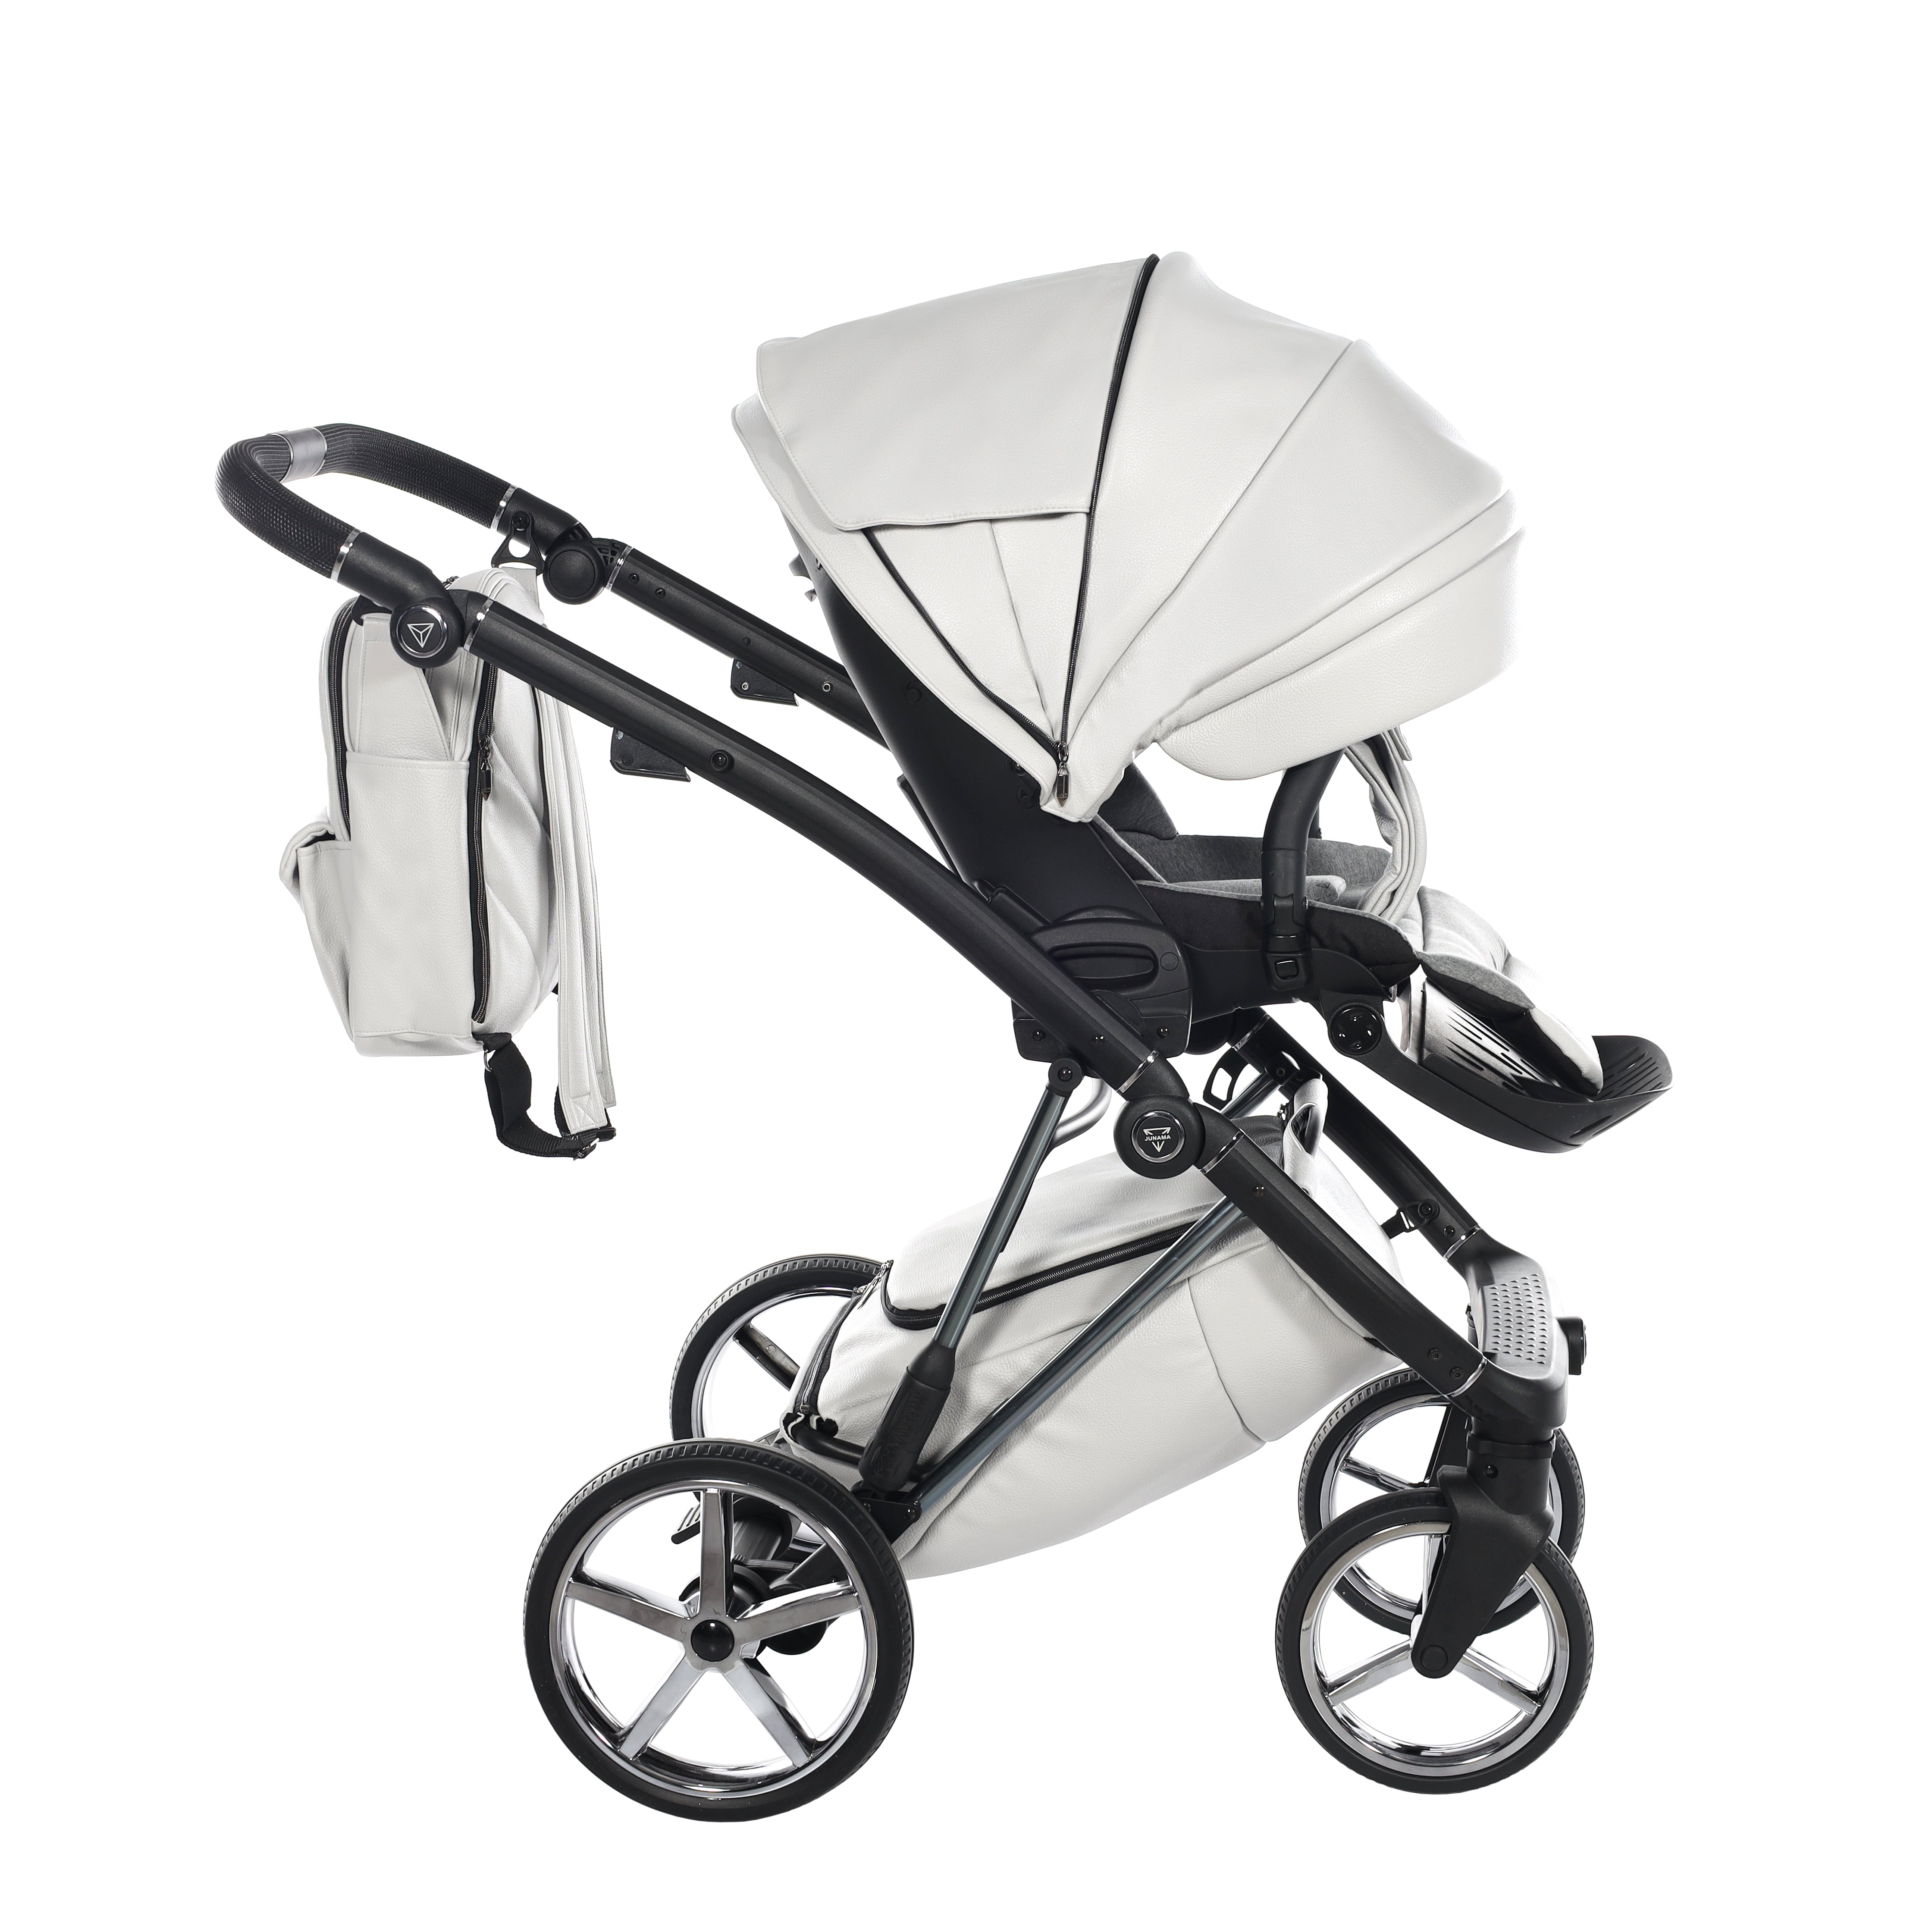 Junama AIR Premium V3, baby stroller and bassinet 2 in 1 - WHITE BLACK, Code number: JUNAIRP04